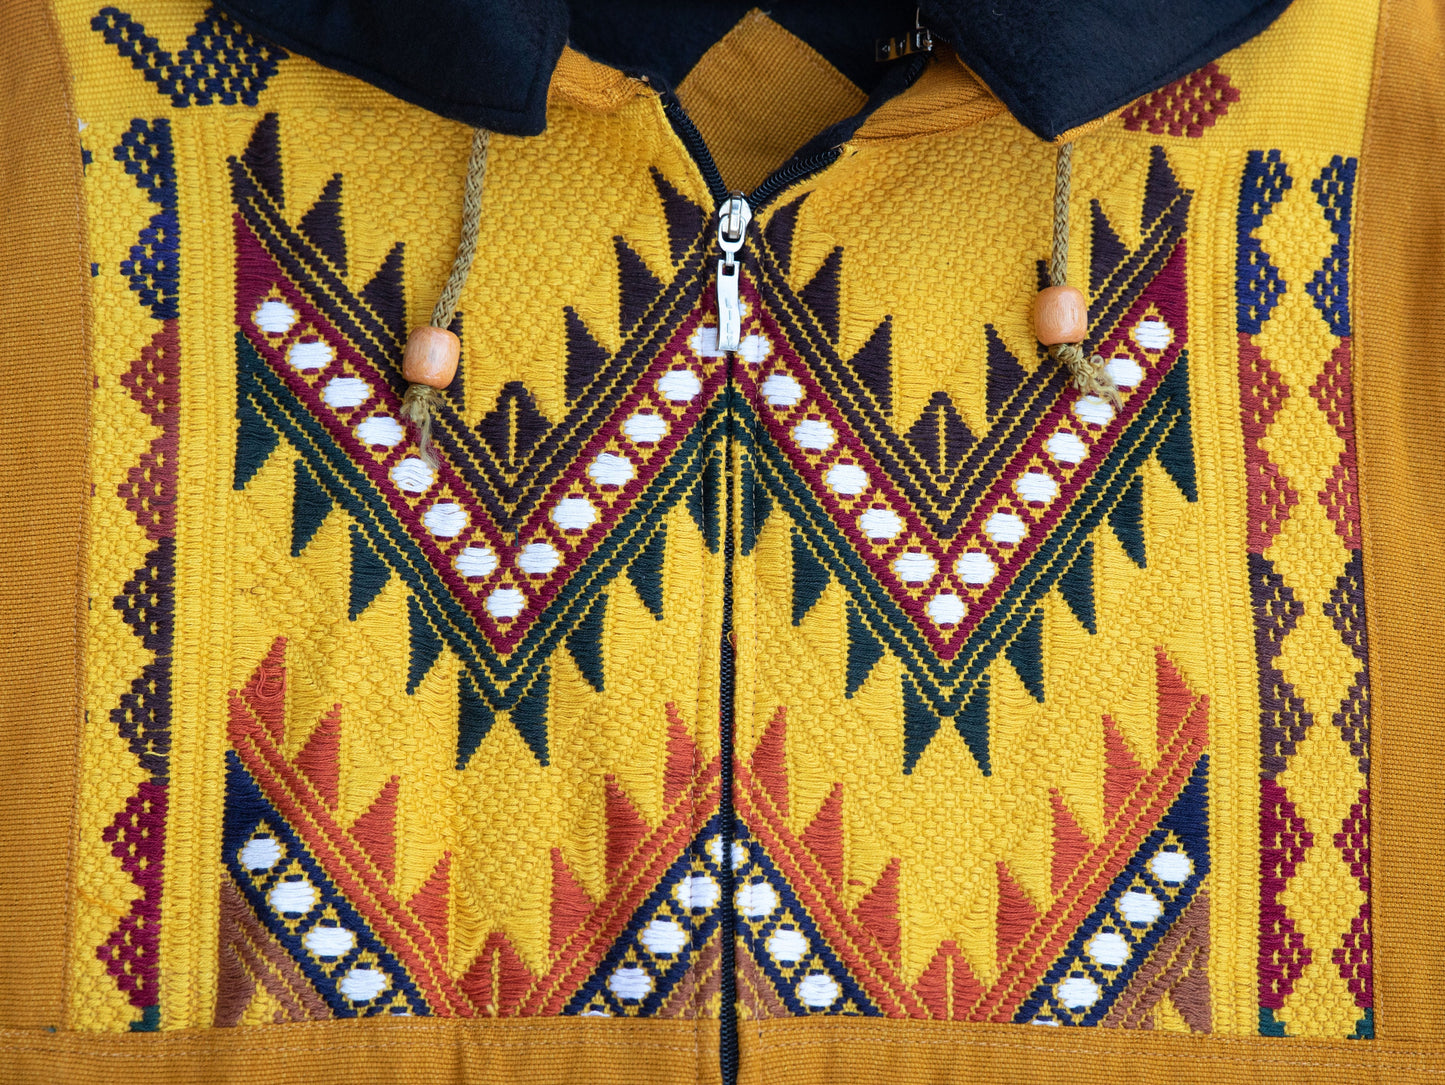 Maya Mountain Marigold Pato Jacket